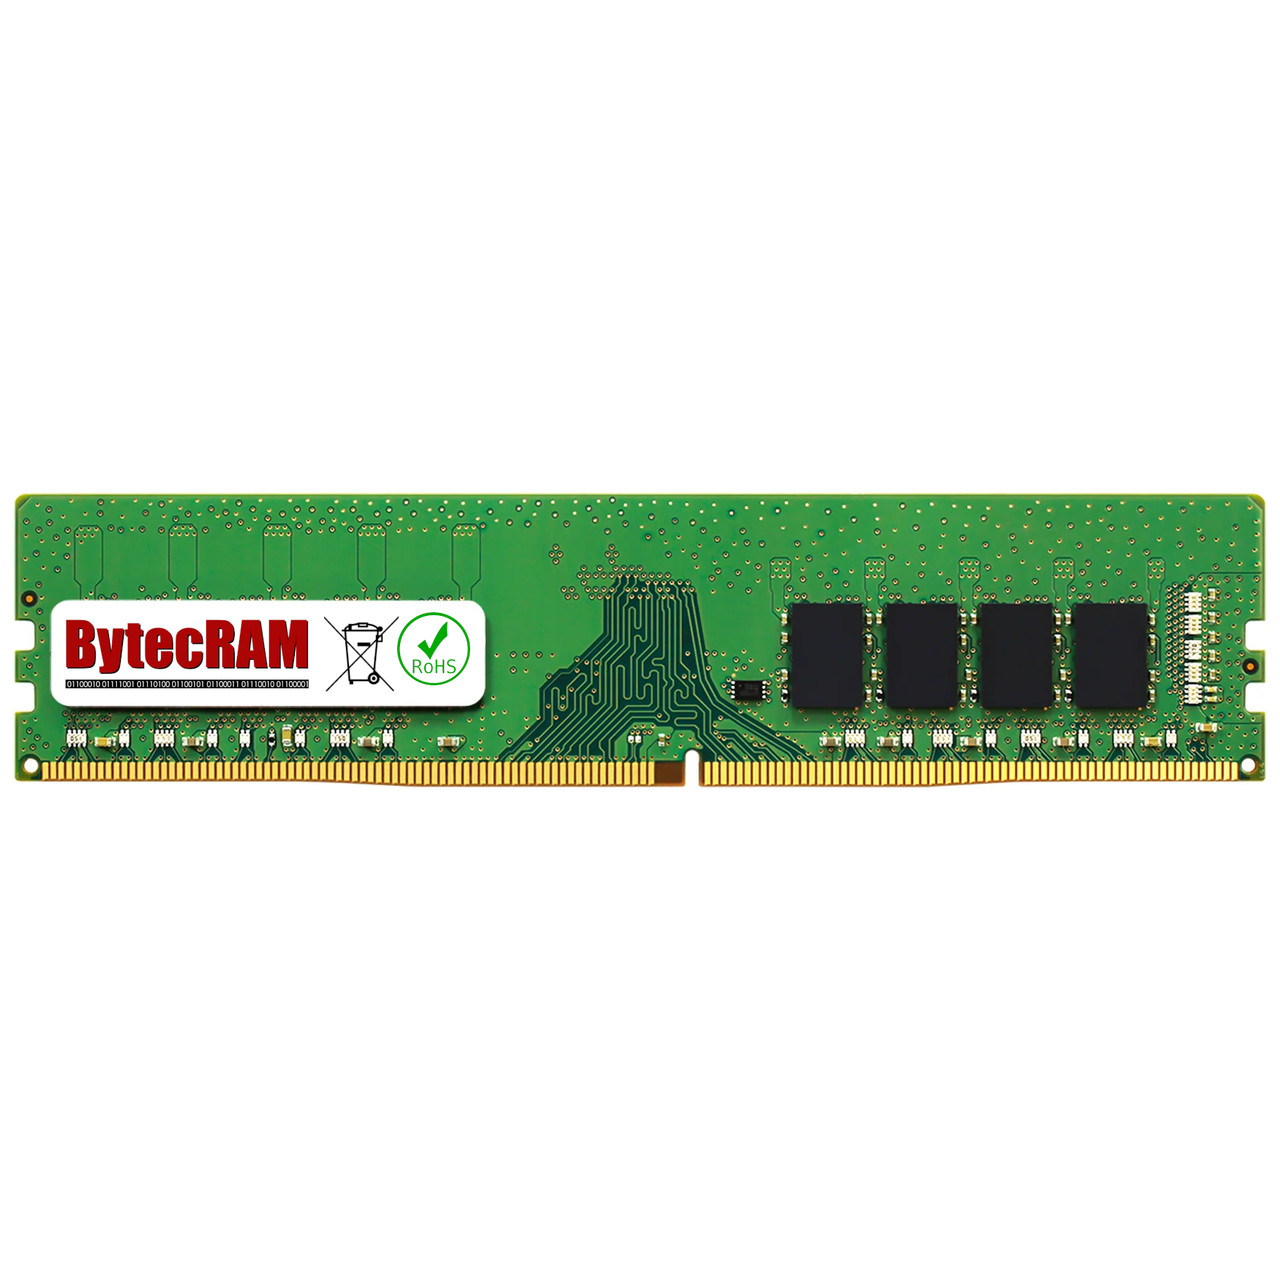 eBay*16GB HP Slim S01-aF0401ng DDR4 3200MHz UDIMM Memory RAM Upgrade